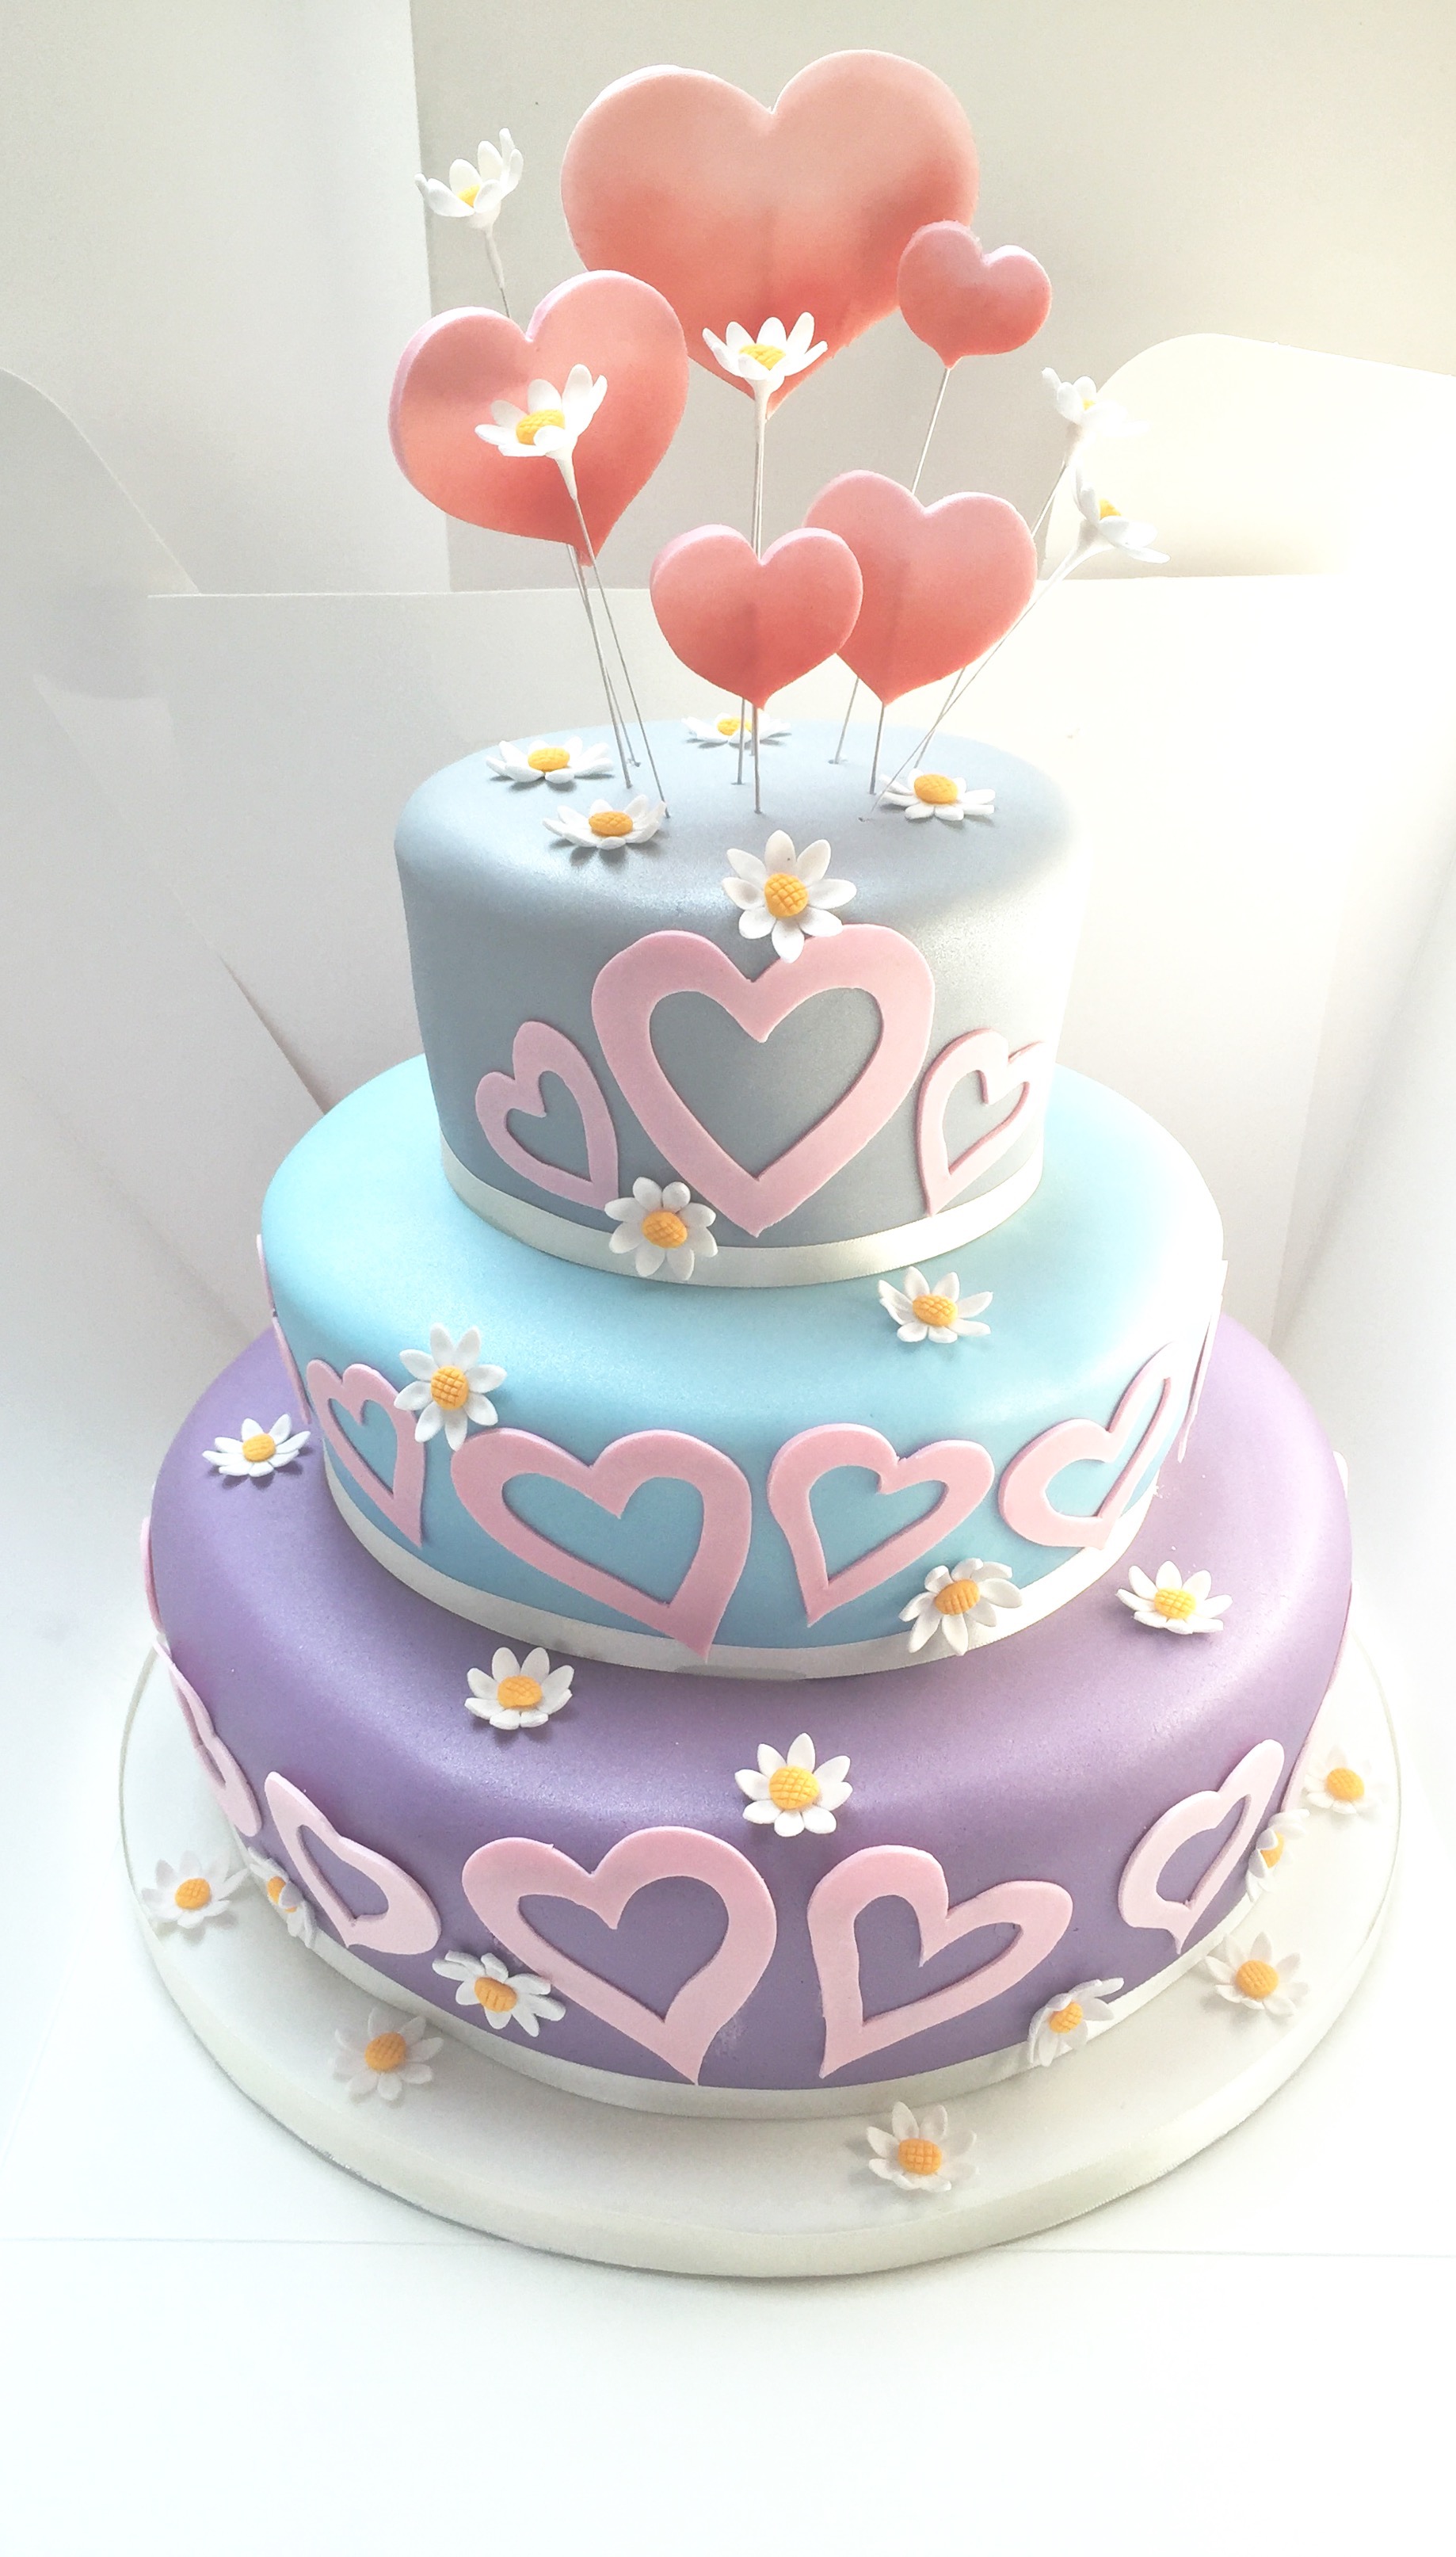 Celebration Cakes! Anniversaries, birthdays…